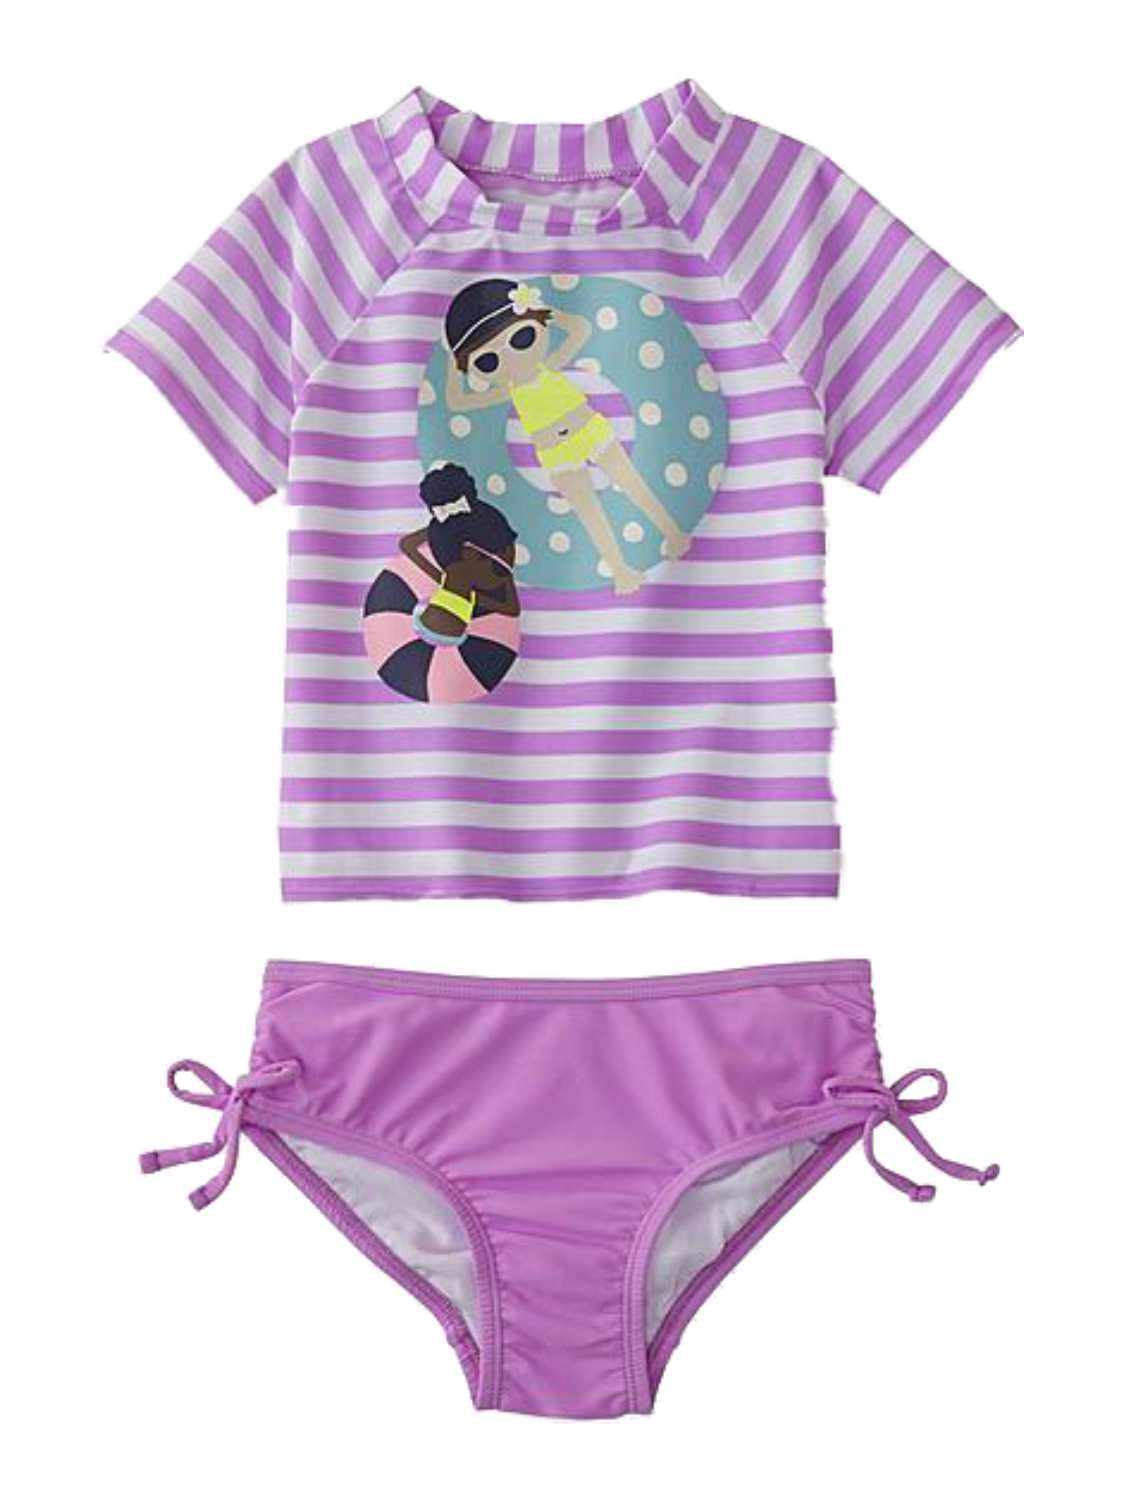 remeo suit Baby Boys Shark Guard Sets Short Sleeve Shirt and Shorts Pant Summer Swimwear